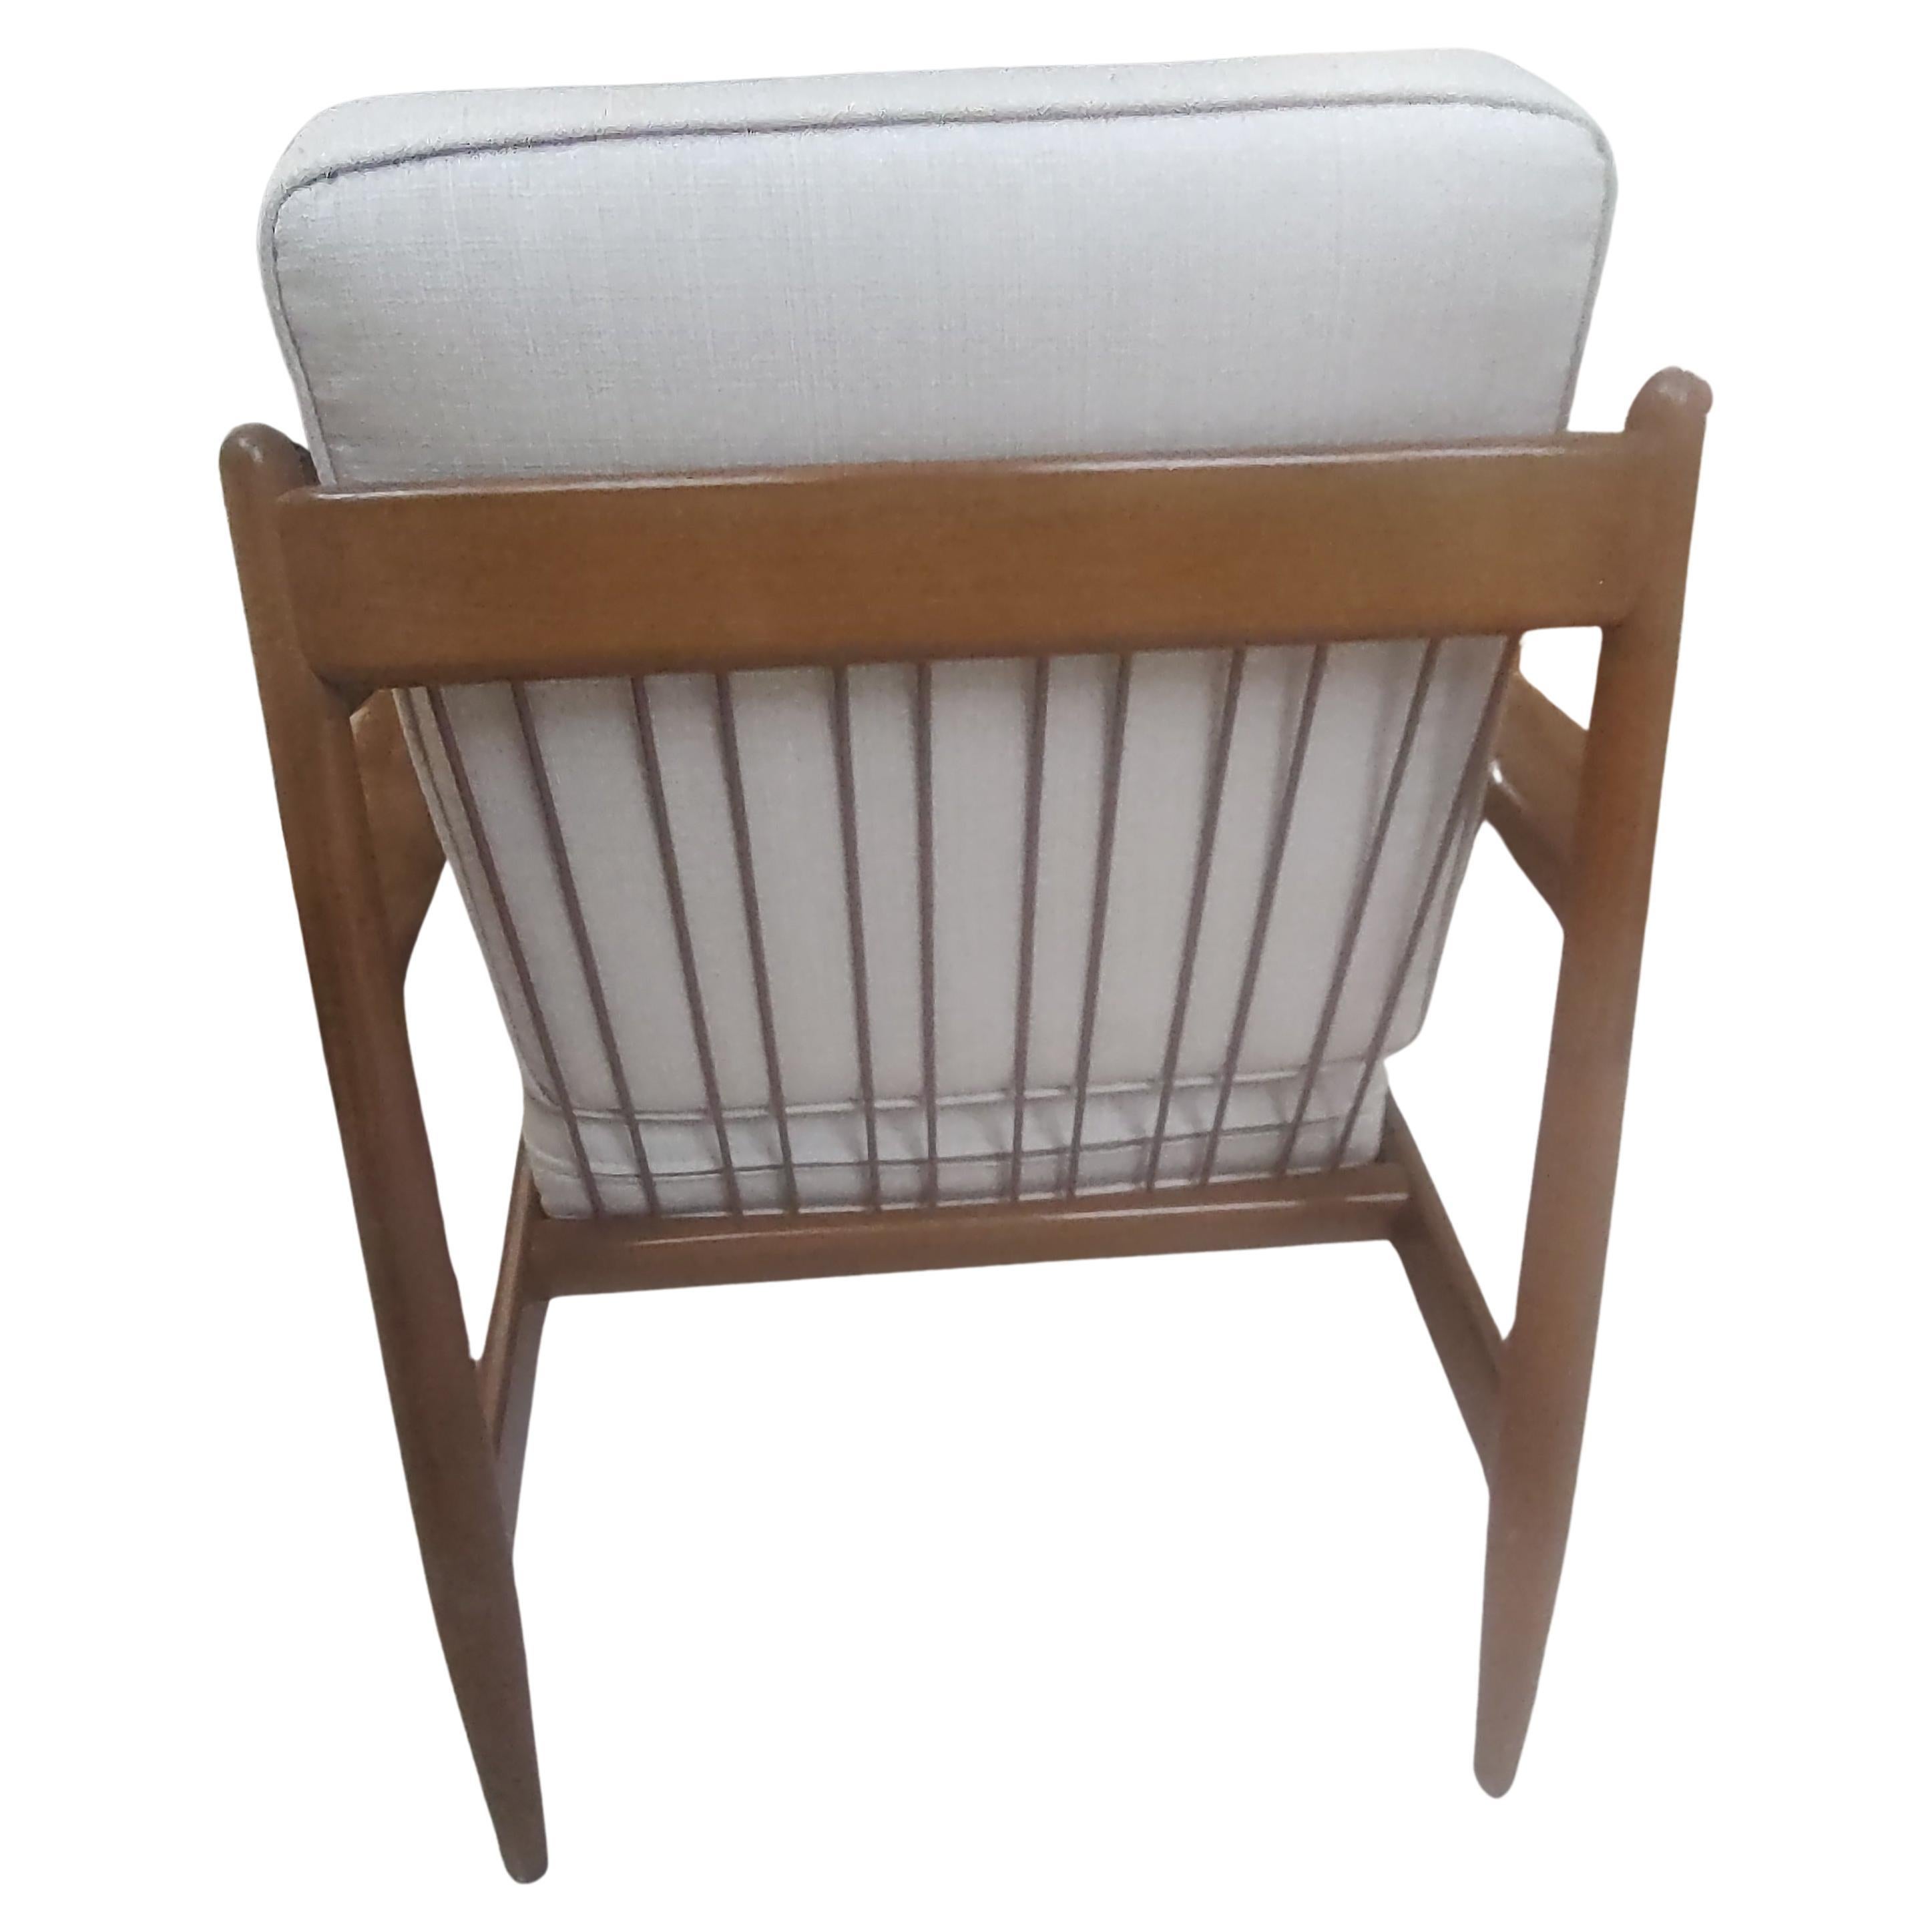 Mid-20th Century Pair Mid Century Danish Modern Beech Lounge Chairs by Grete Jalk - John Stuart  For Sale